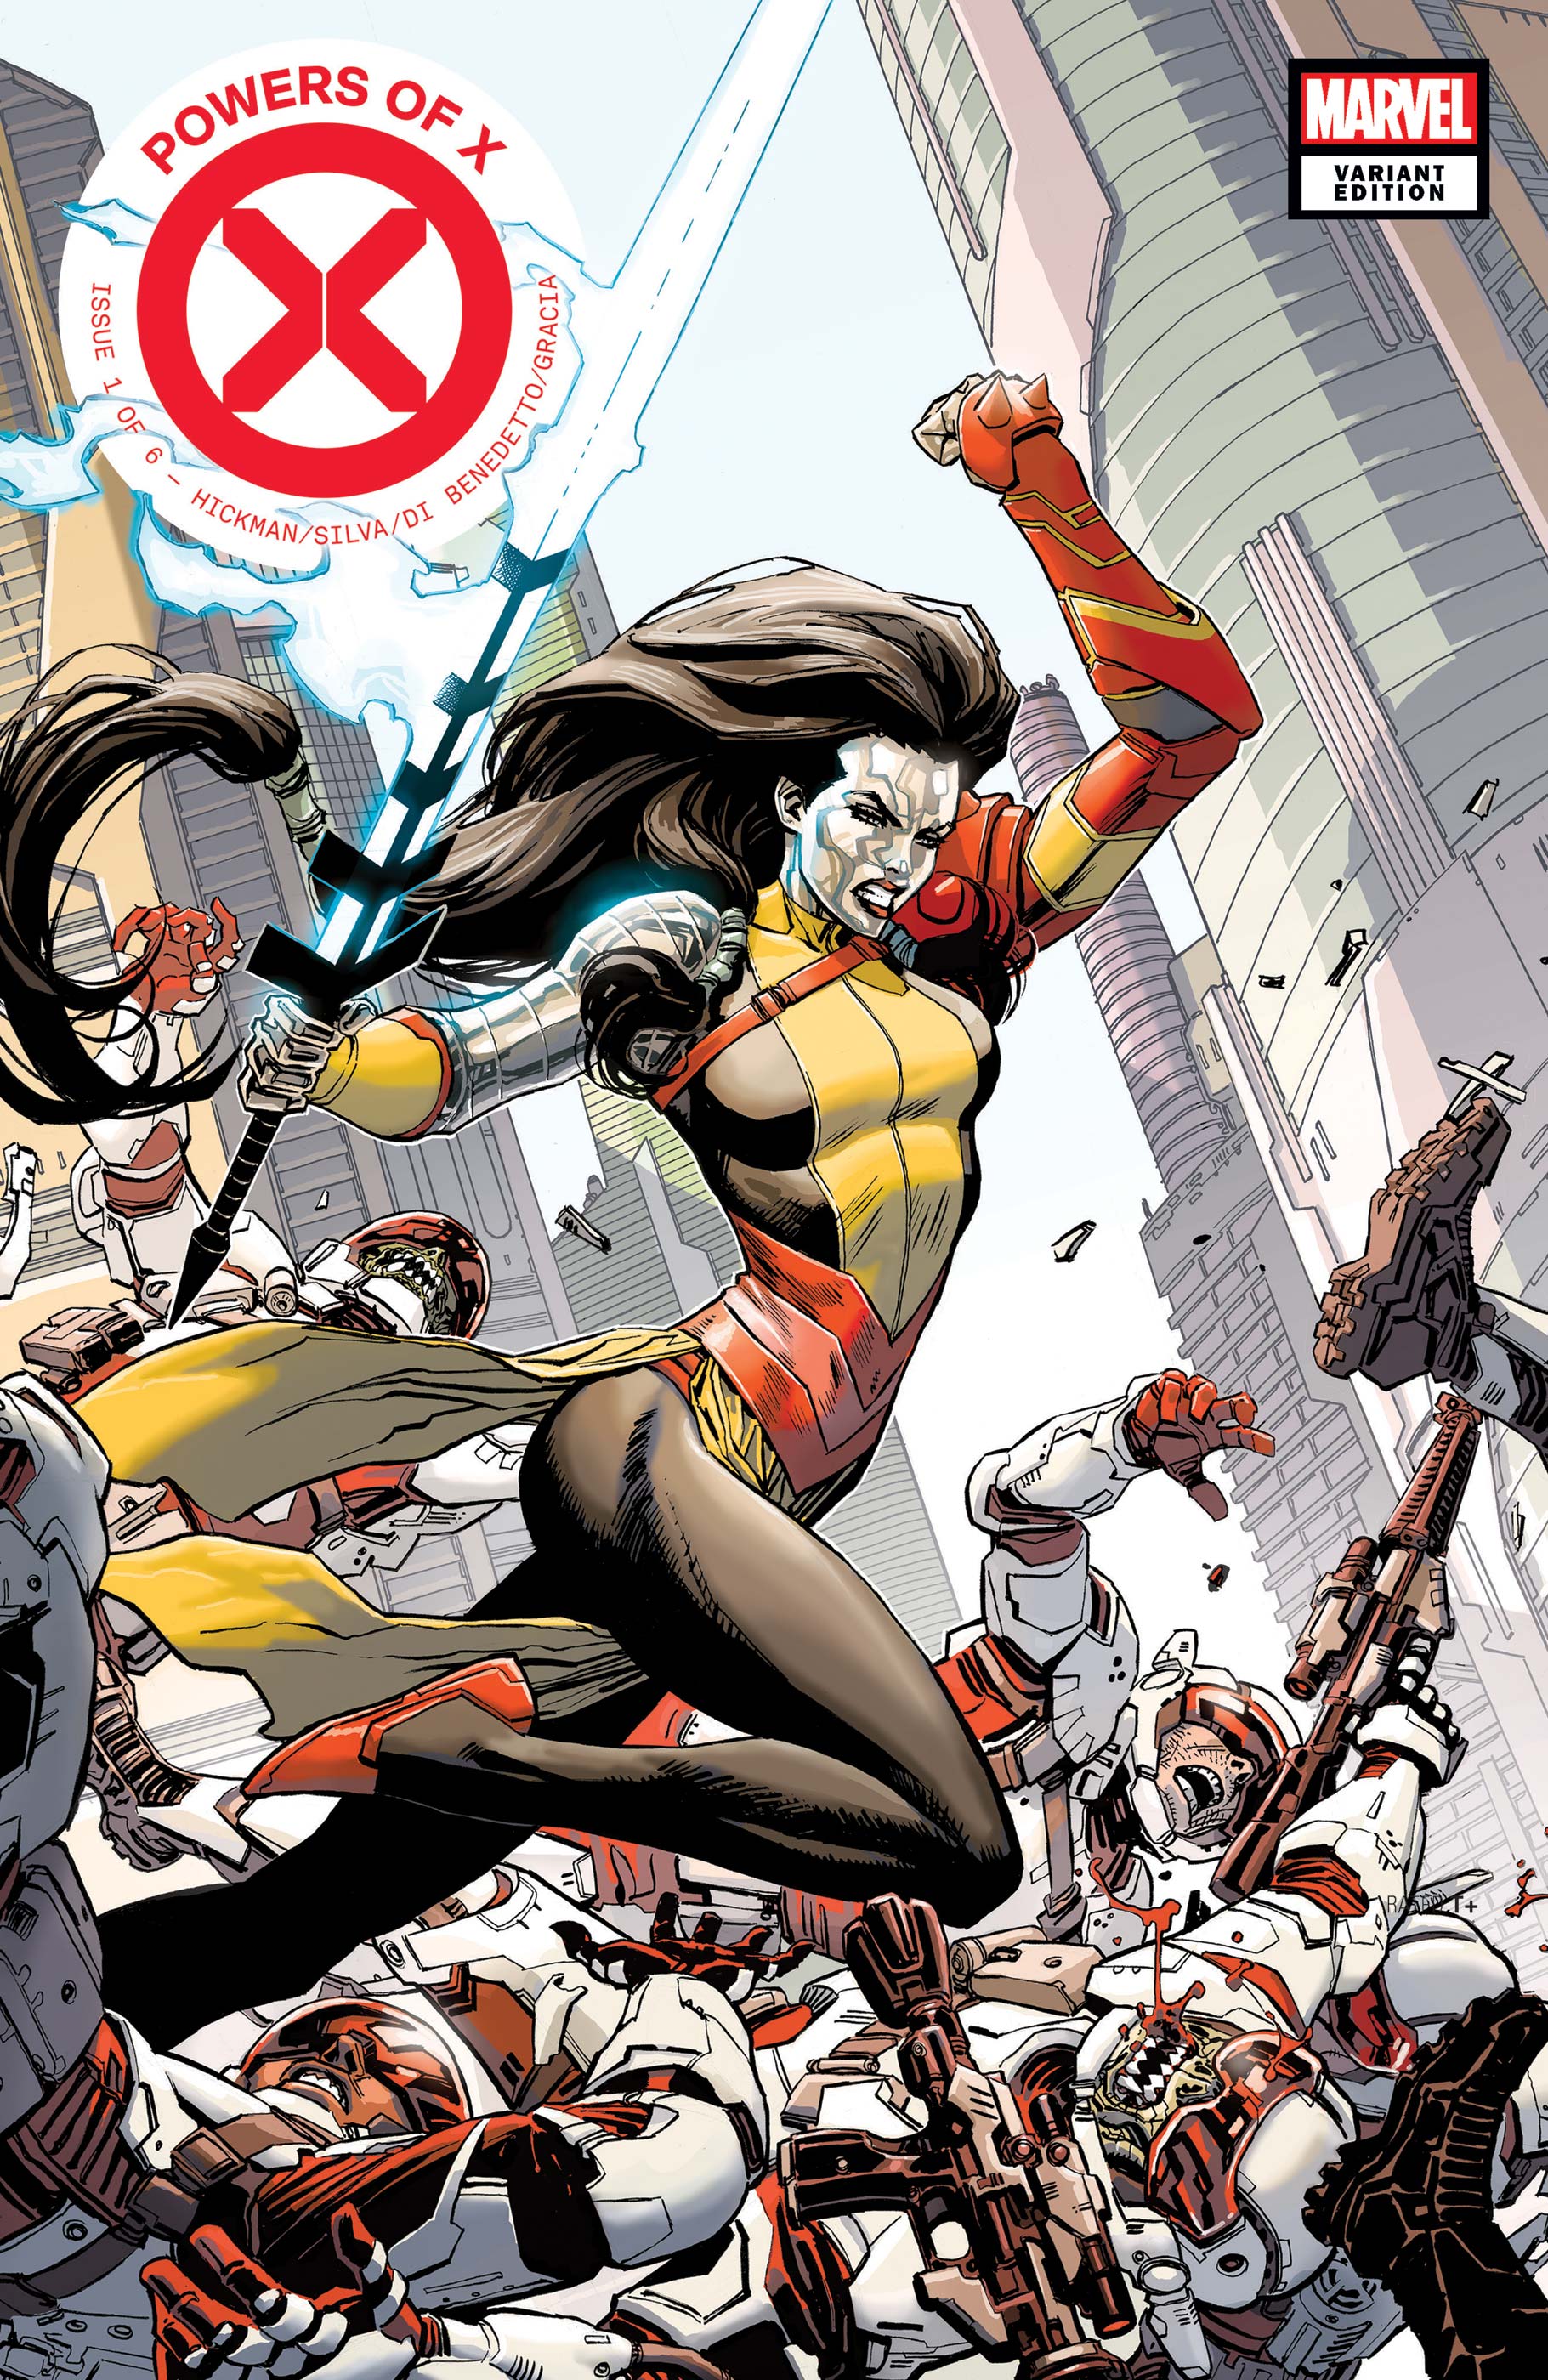 Marvel Comics 2019 1:10 Huddleston Variant Powers of X #1 of 6 